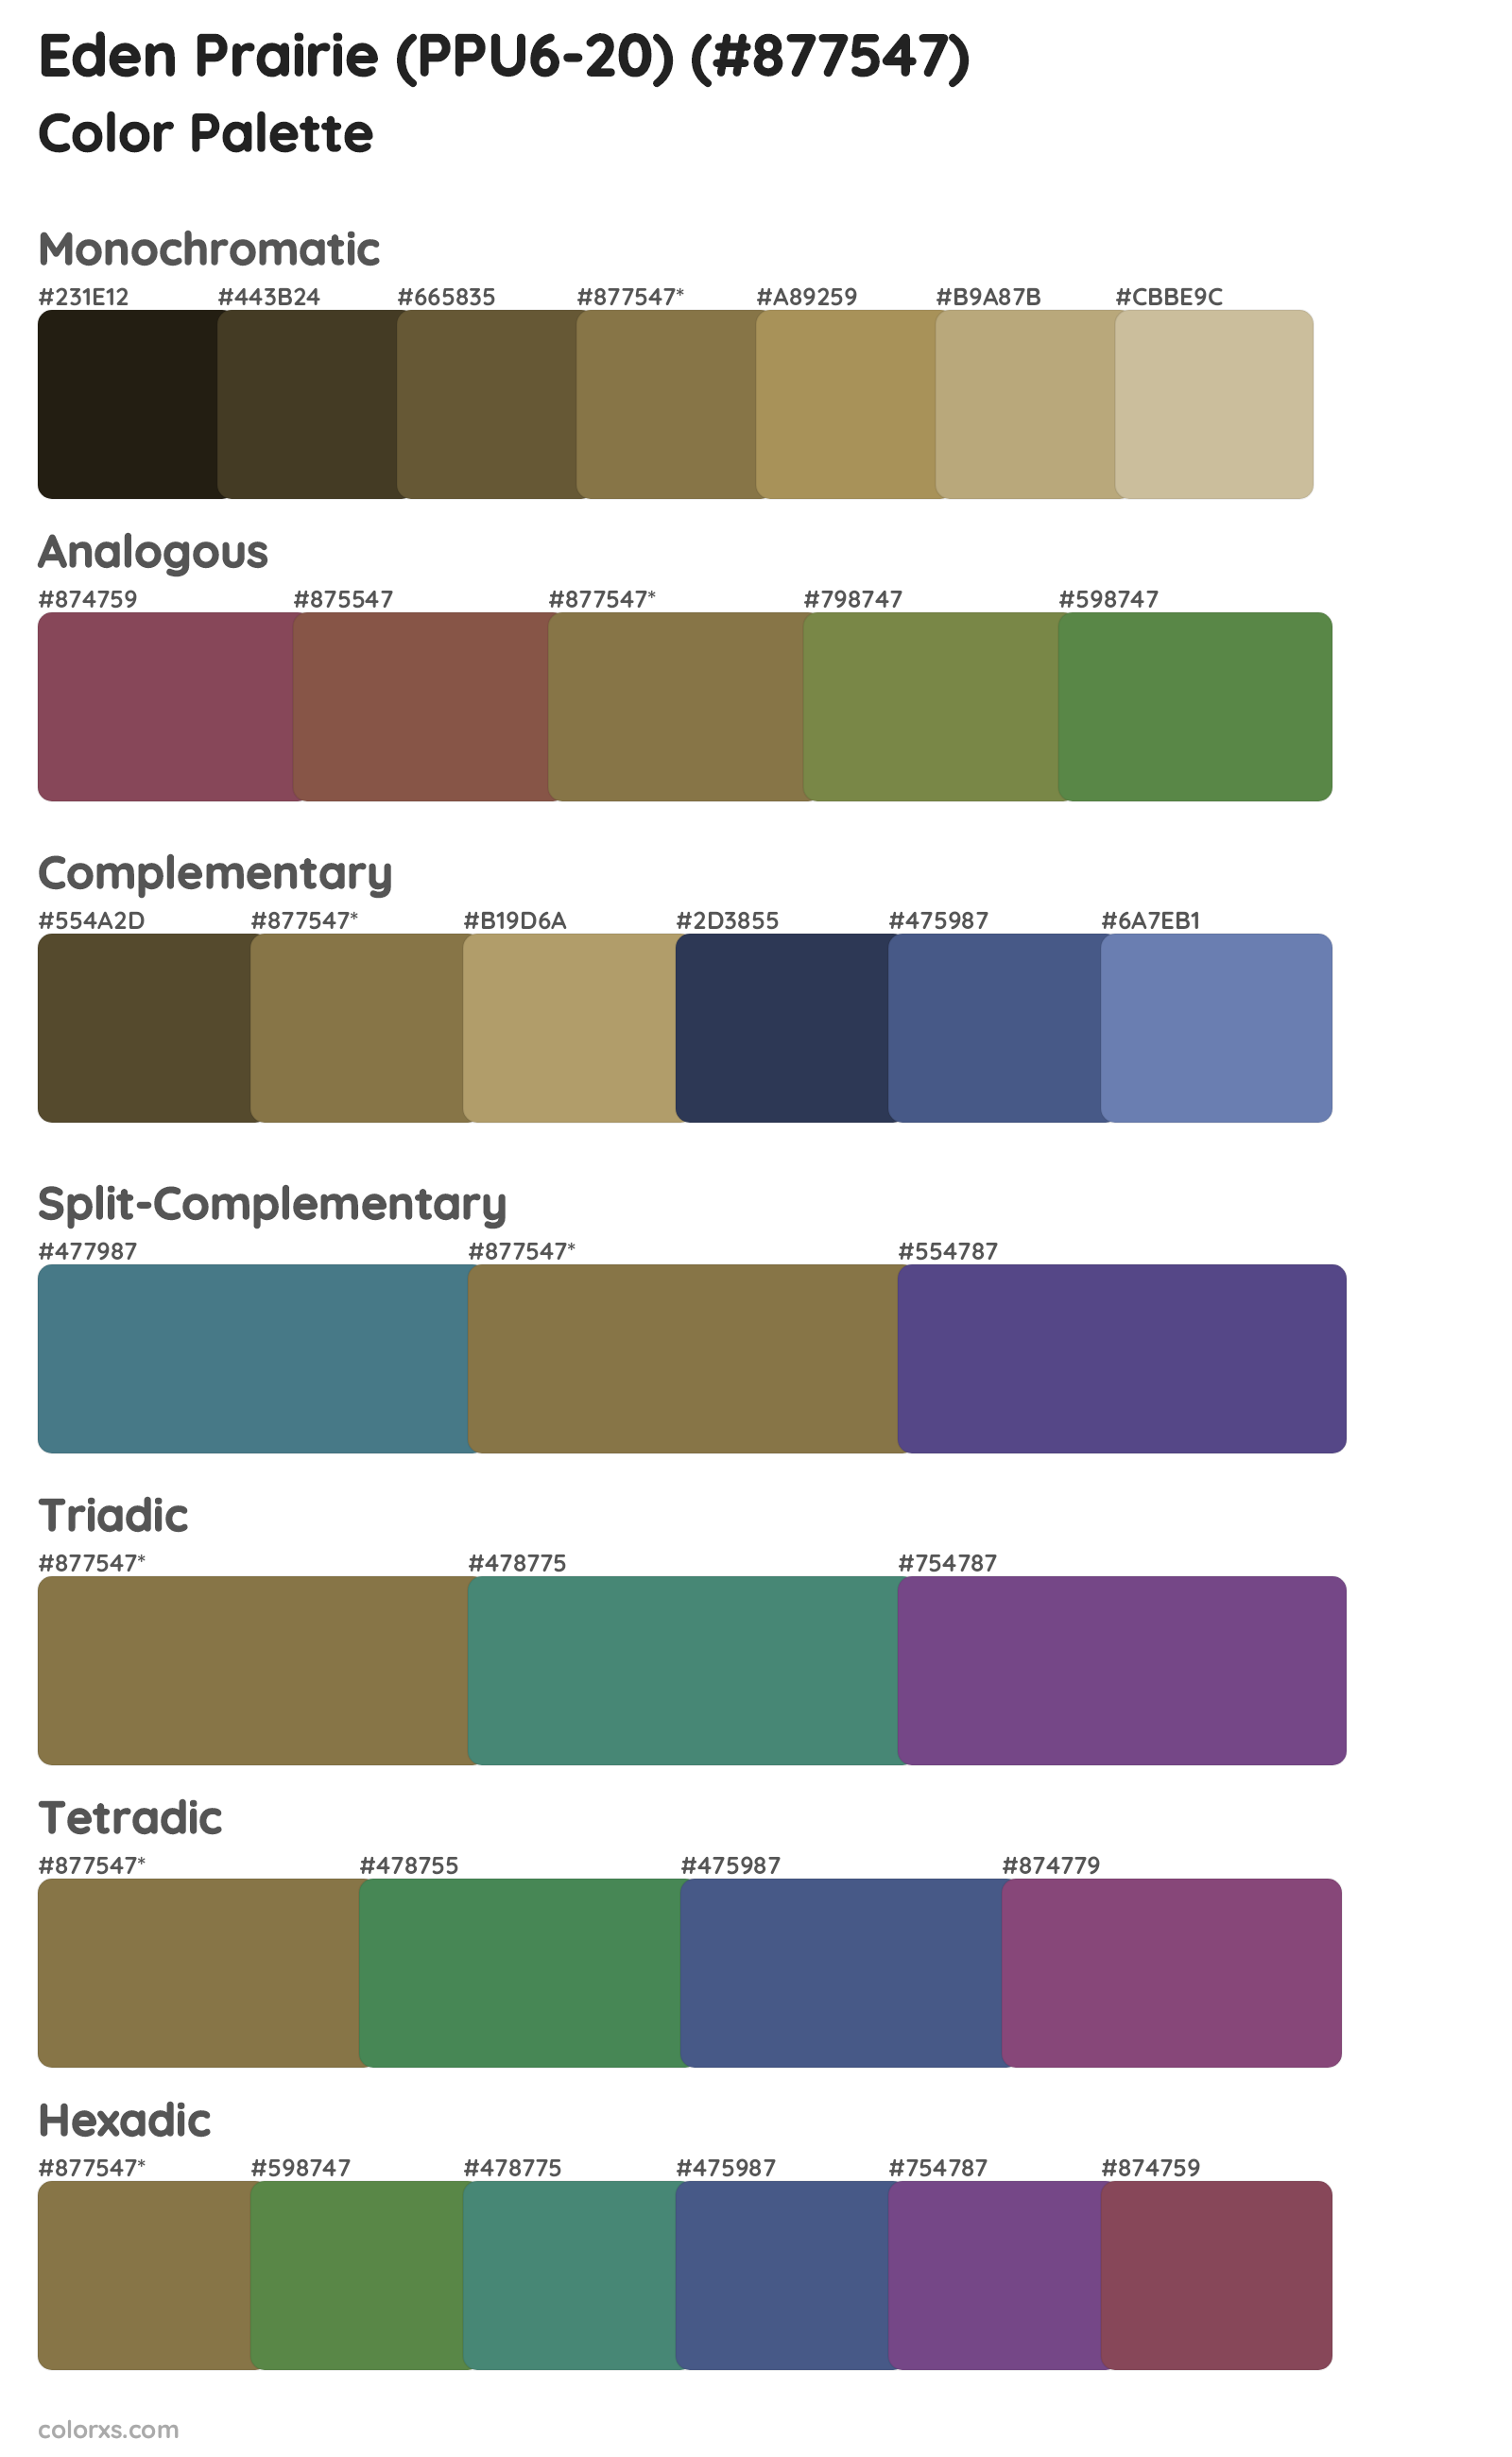 Eden Prairie (PPU6-20) Color Scheme Palettes